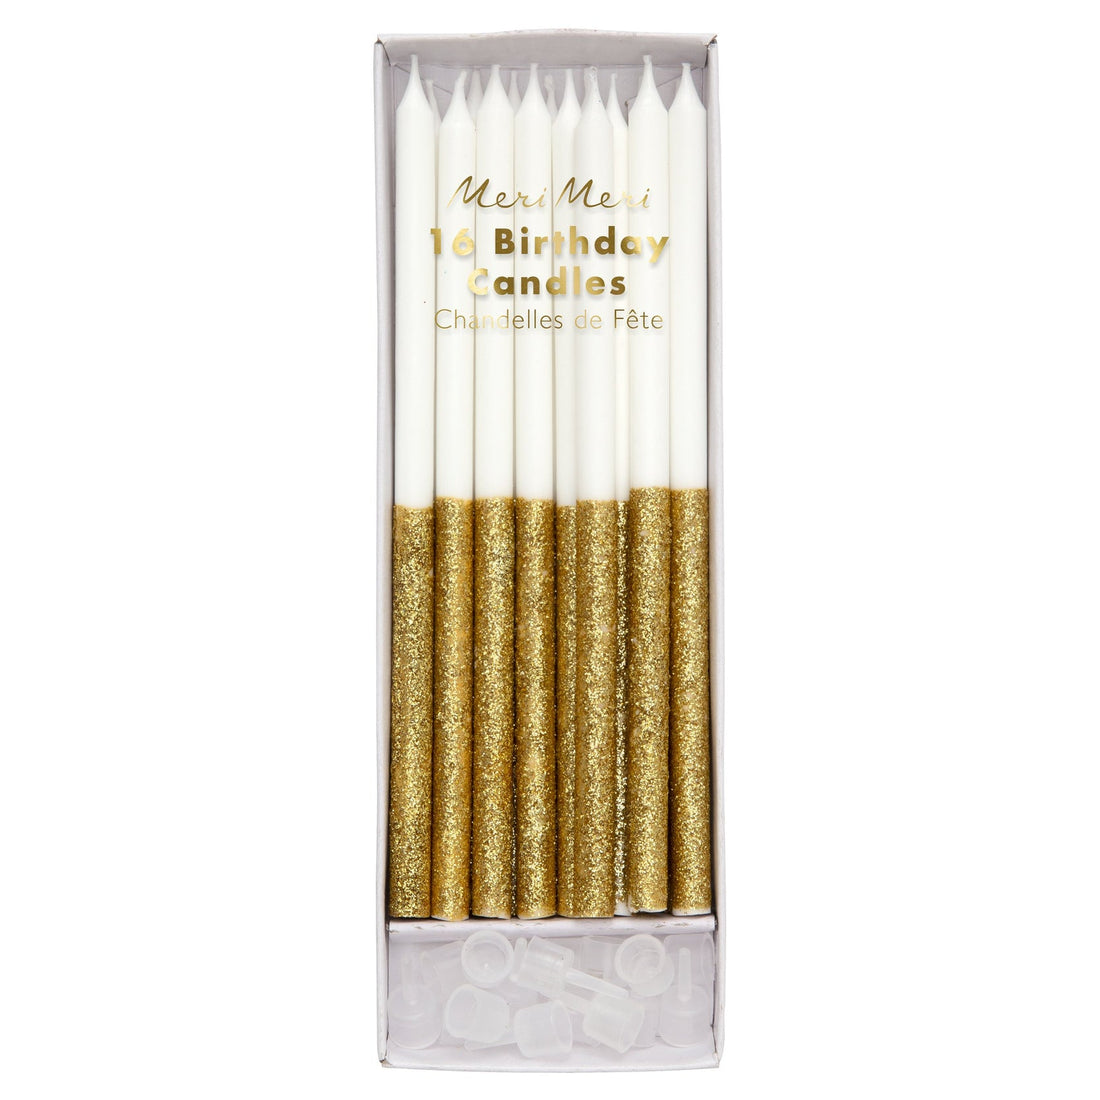 A box of Gold Glitter Dipped Candles by Meri Meri.